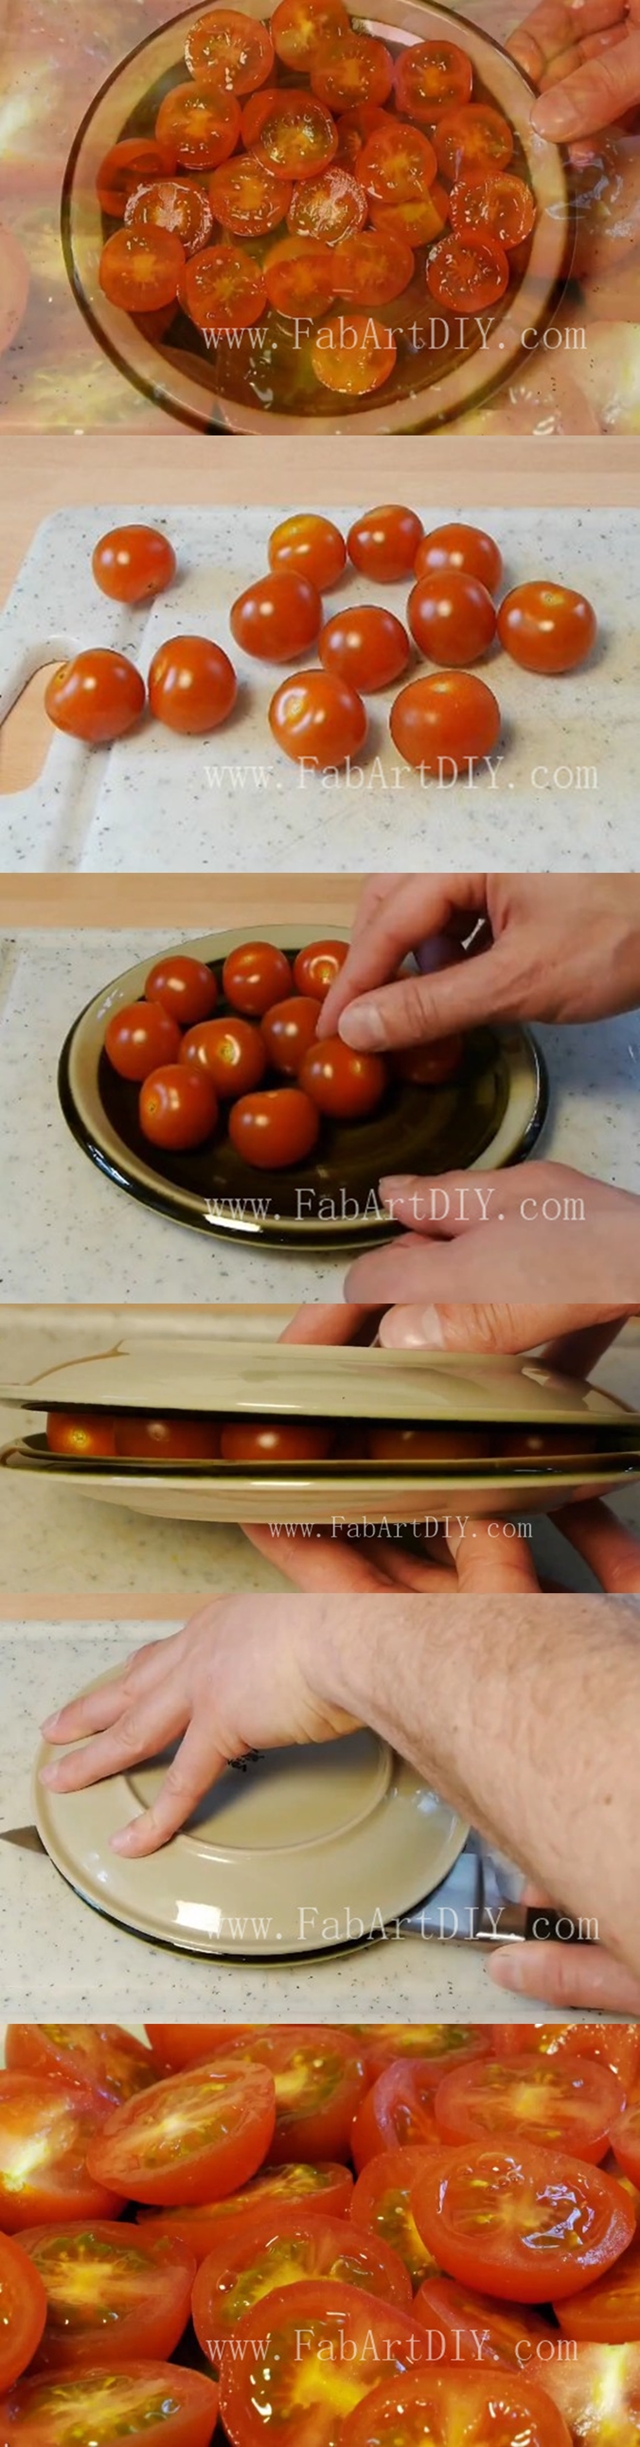 tomato nijia tutorials